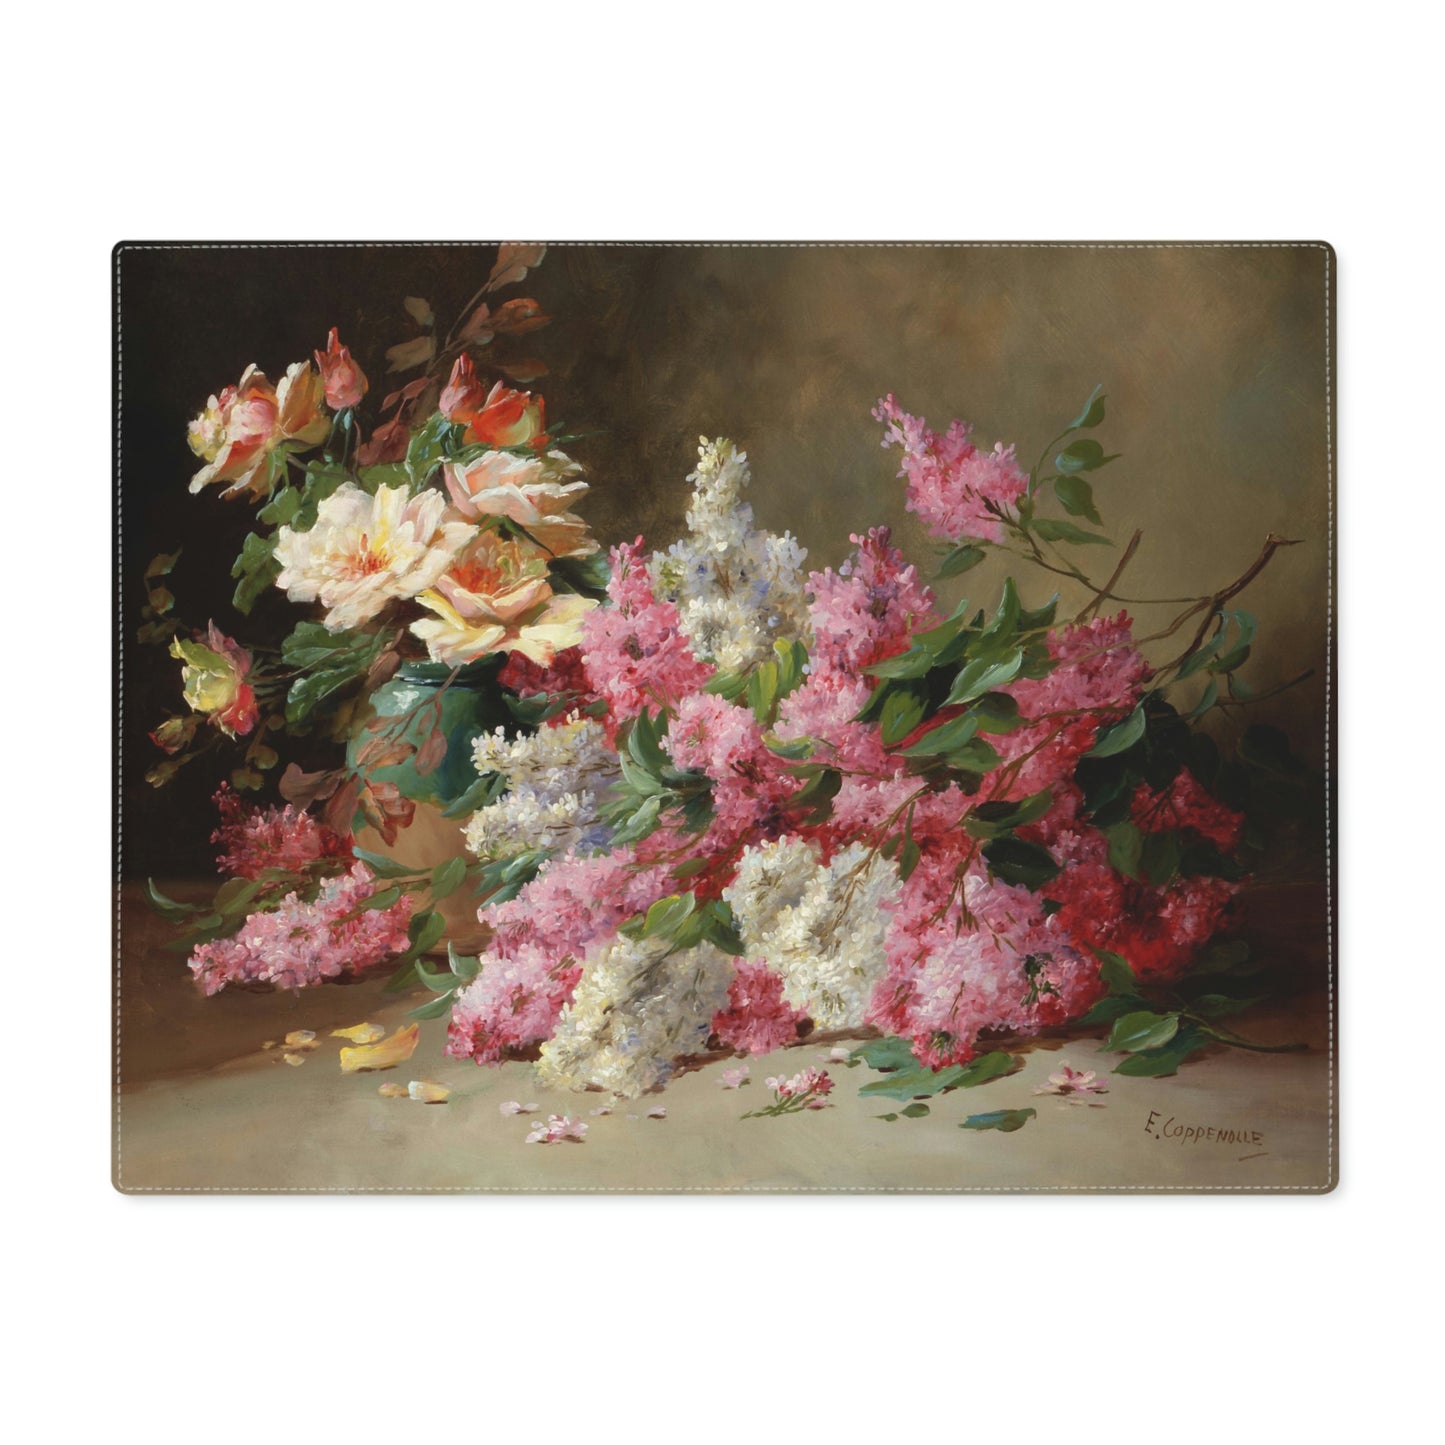 Edmond van Coppenolle: "Lilacs and Roses" - Placemat, 1pc